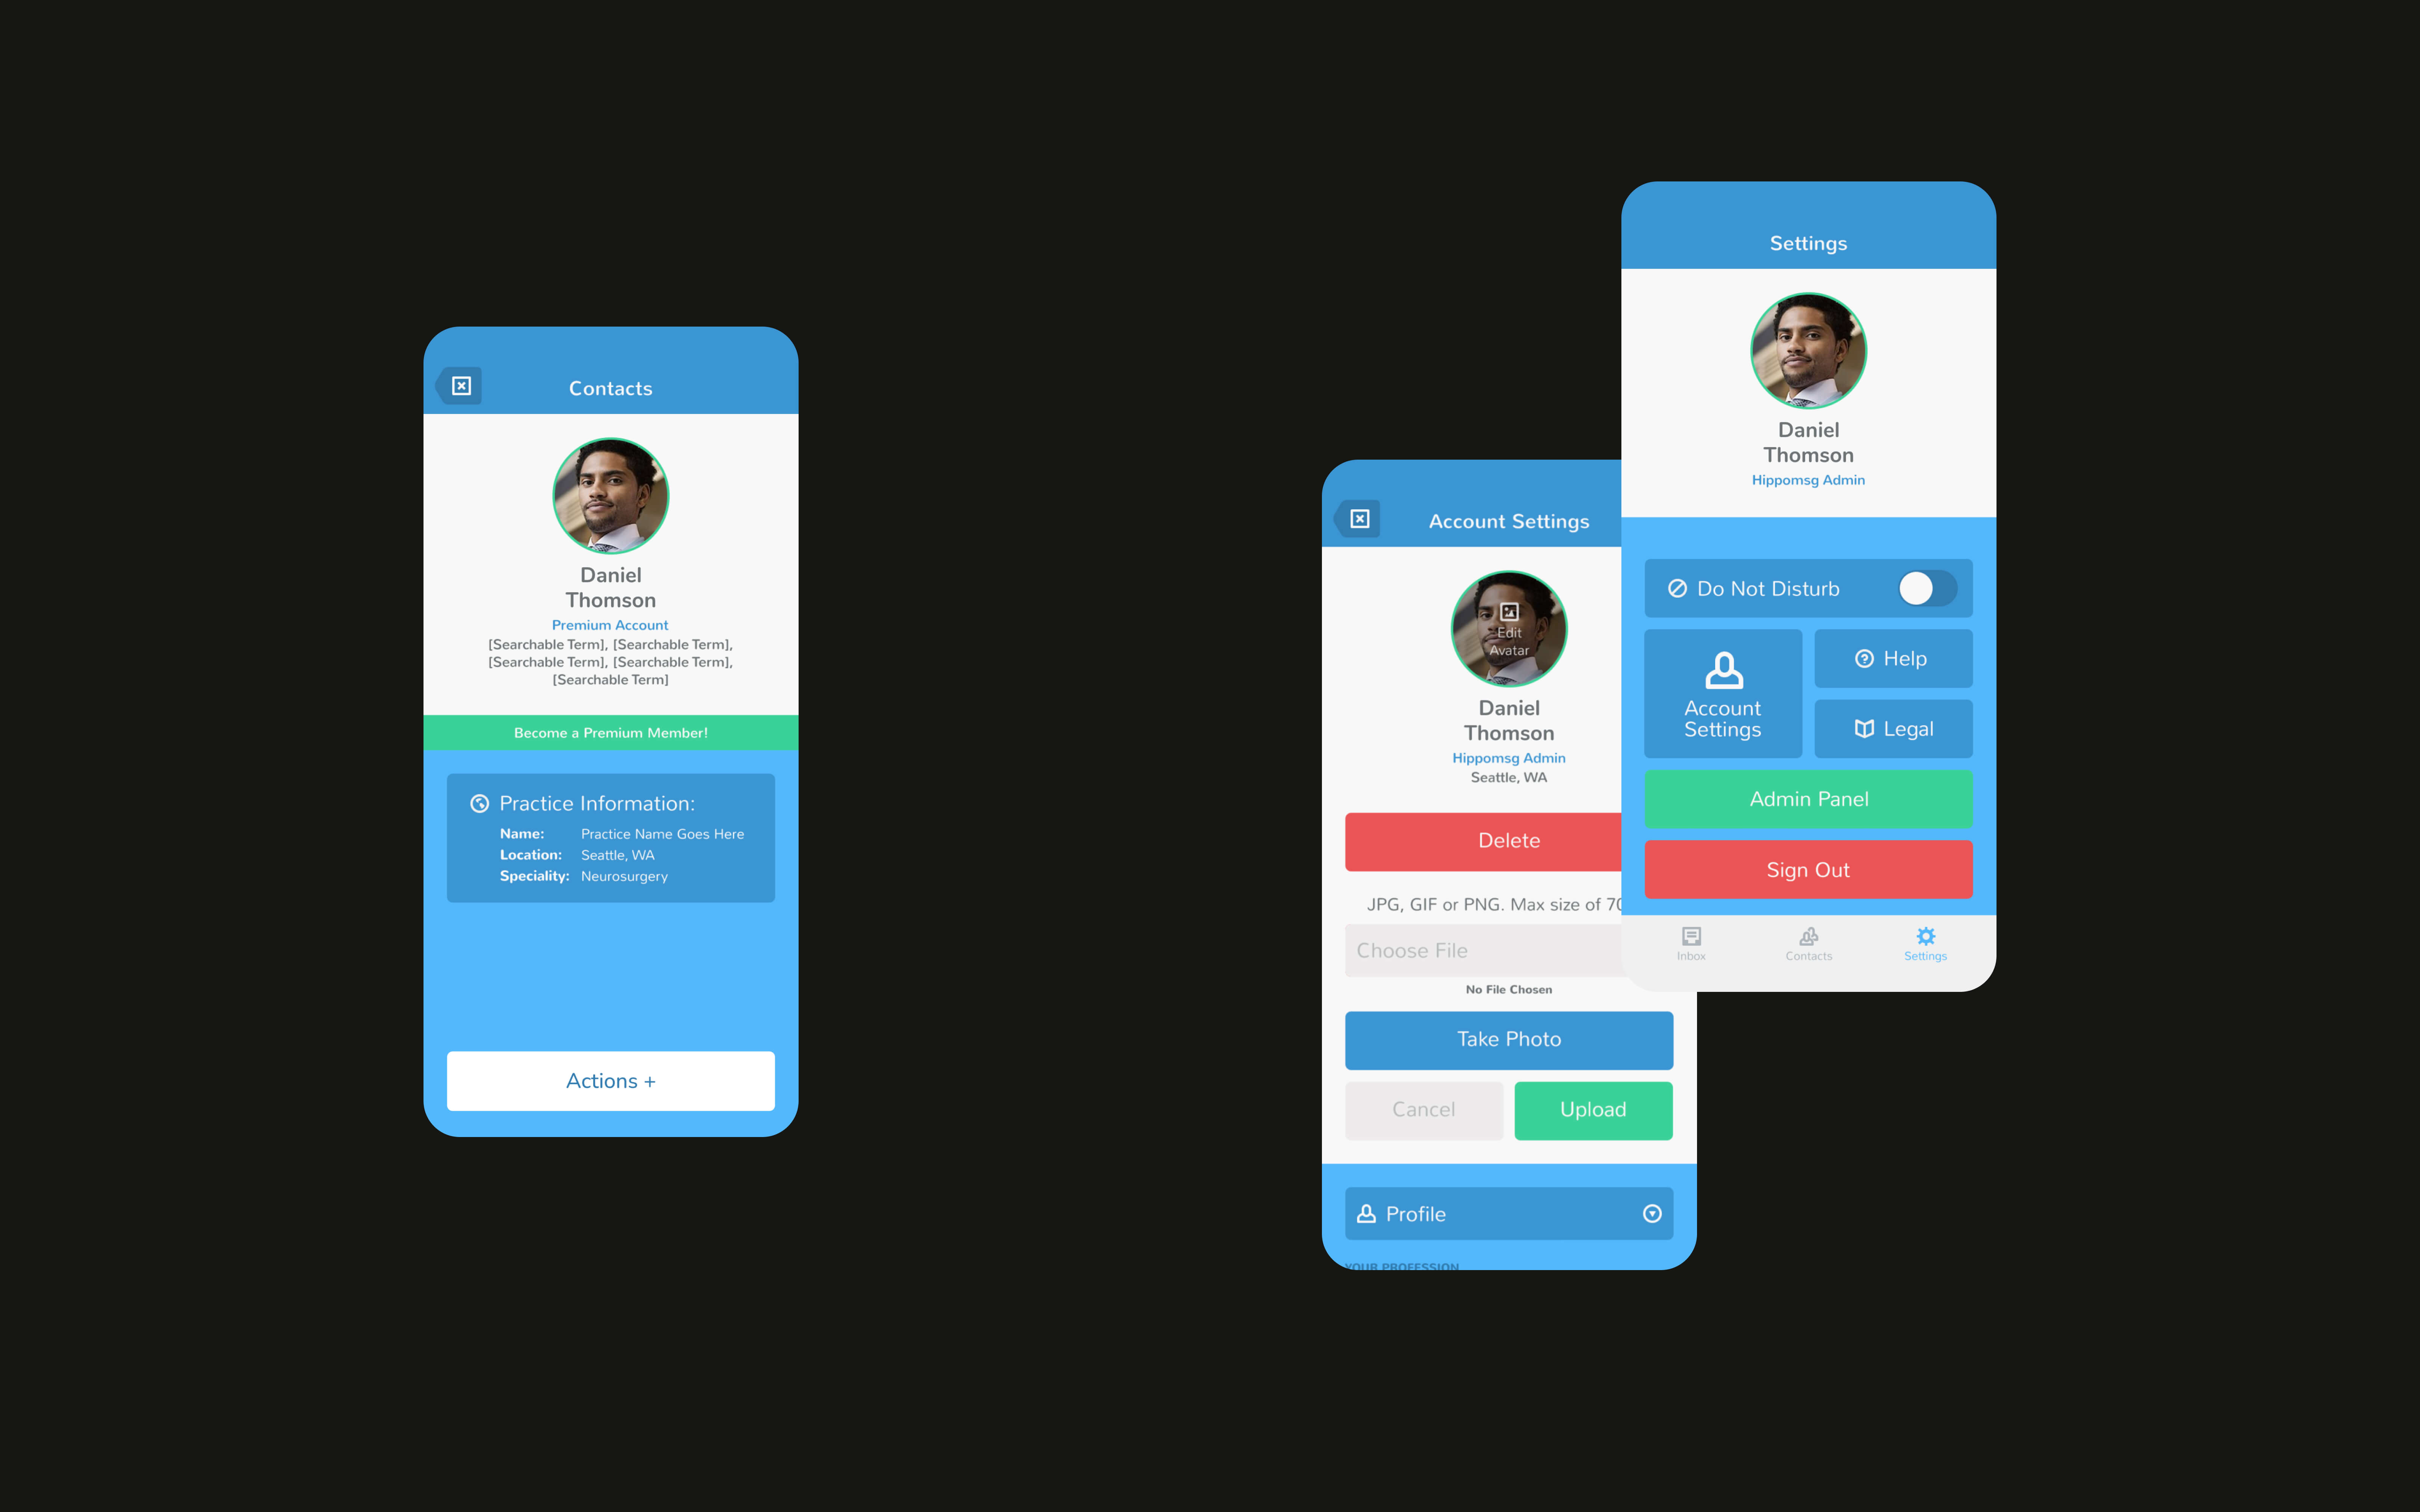 Hippomsg Mobile Application UI Design